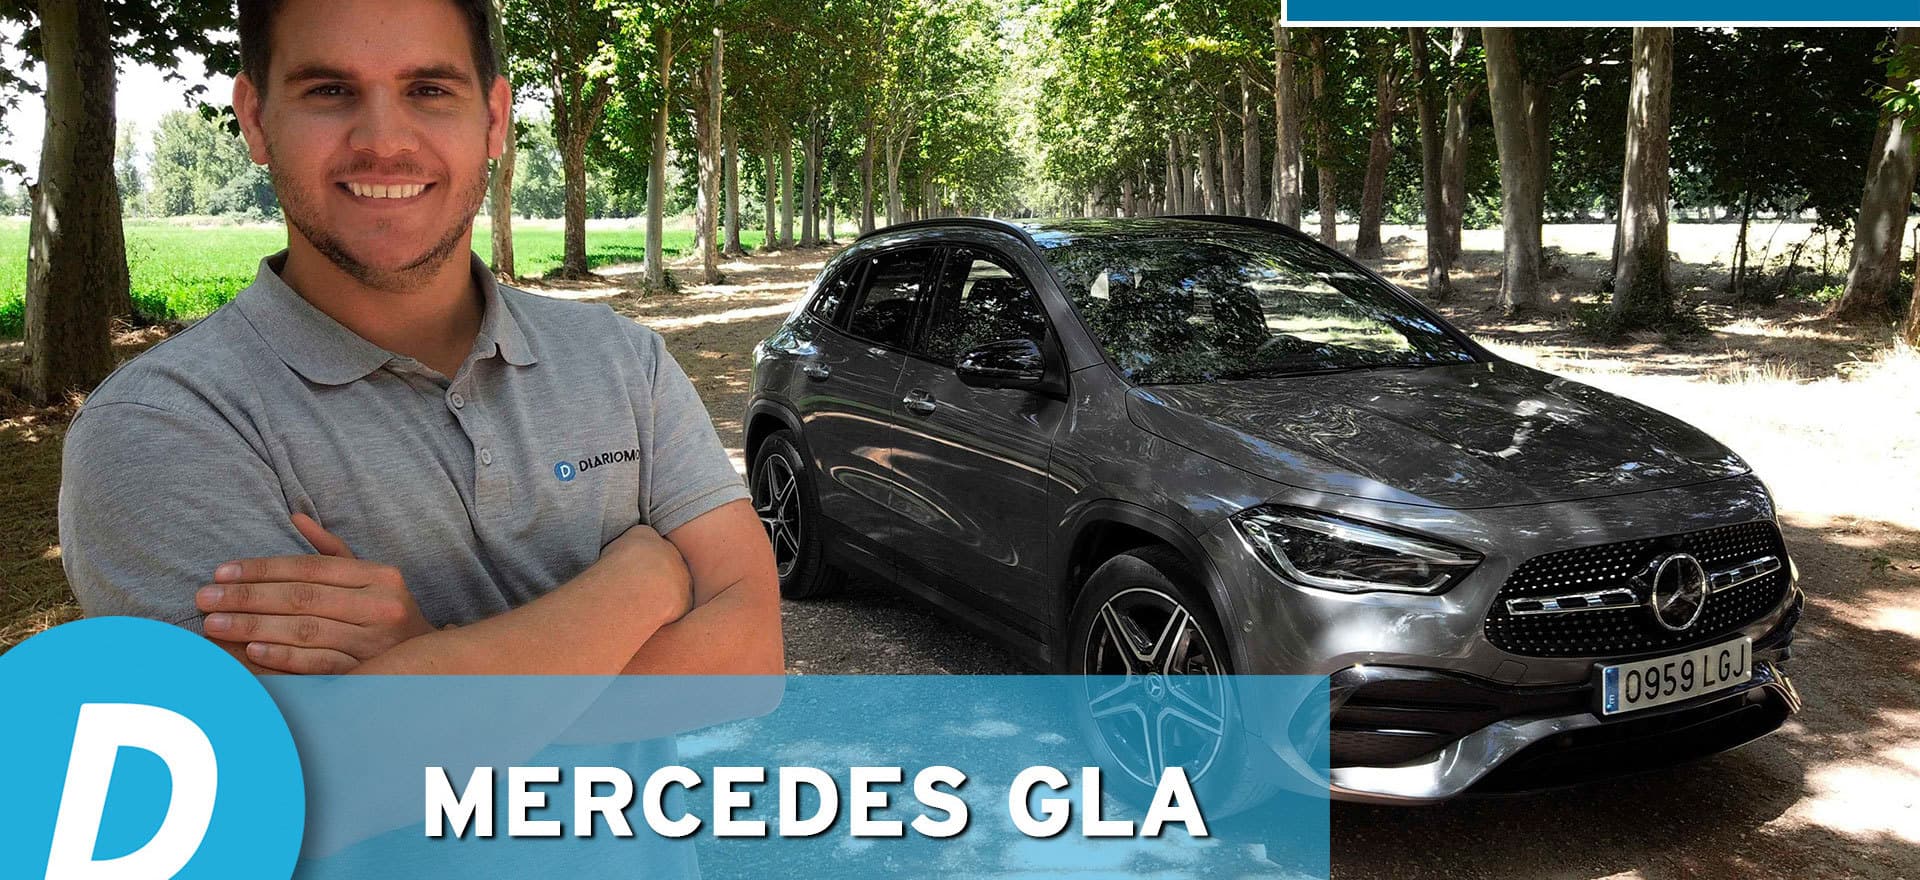 Mercedes GLA 200 7GDCT prueba a fondo